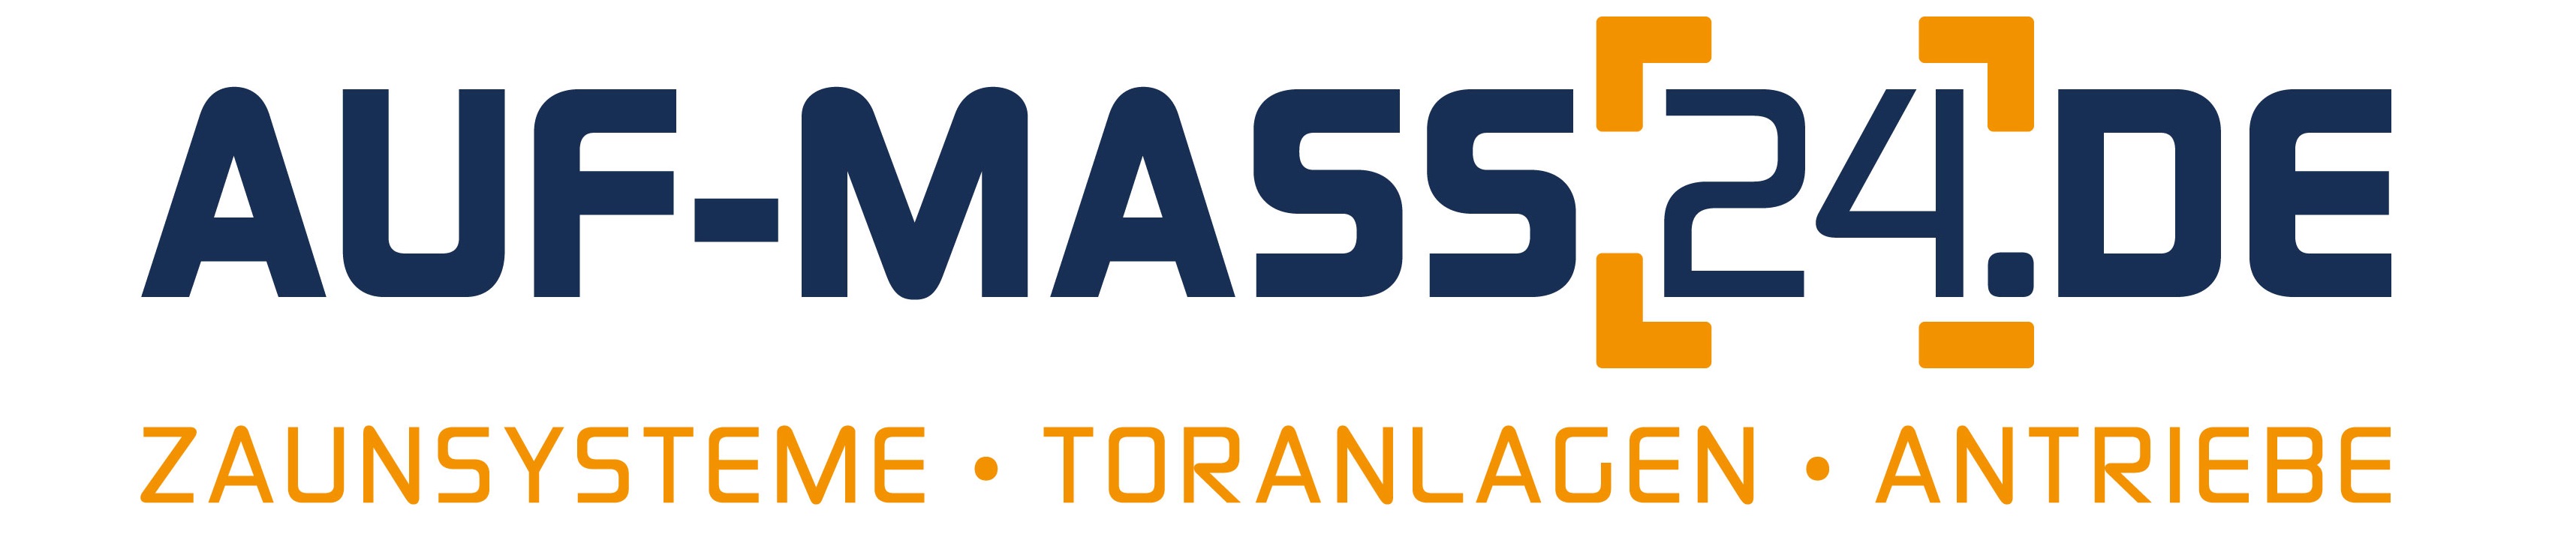 www.auf-mass24.de-Logo